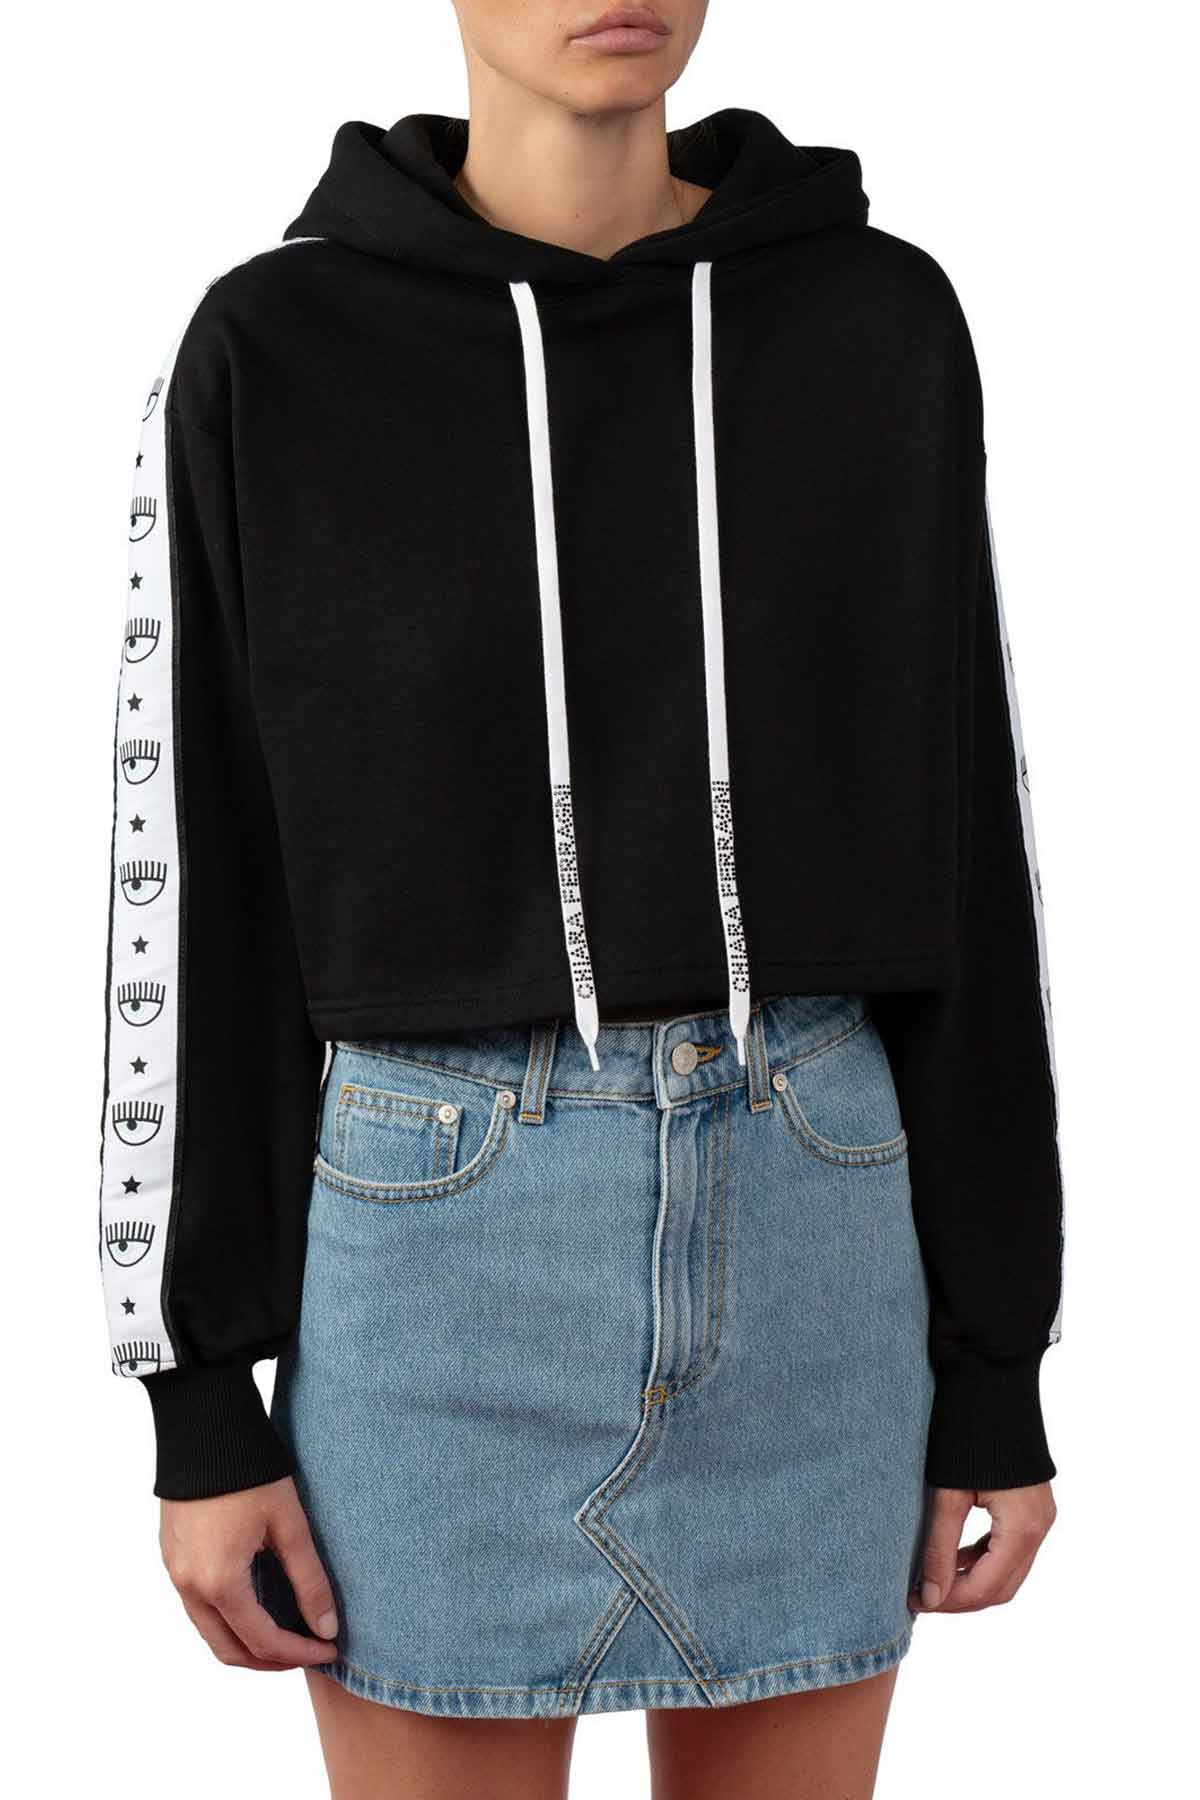 Chiara Ferragni Crop Top Winking Eye Sweatshirt-Libas Trendy Fashion Store